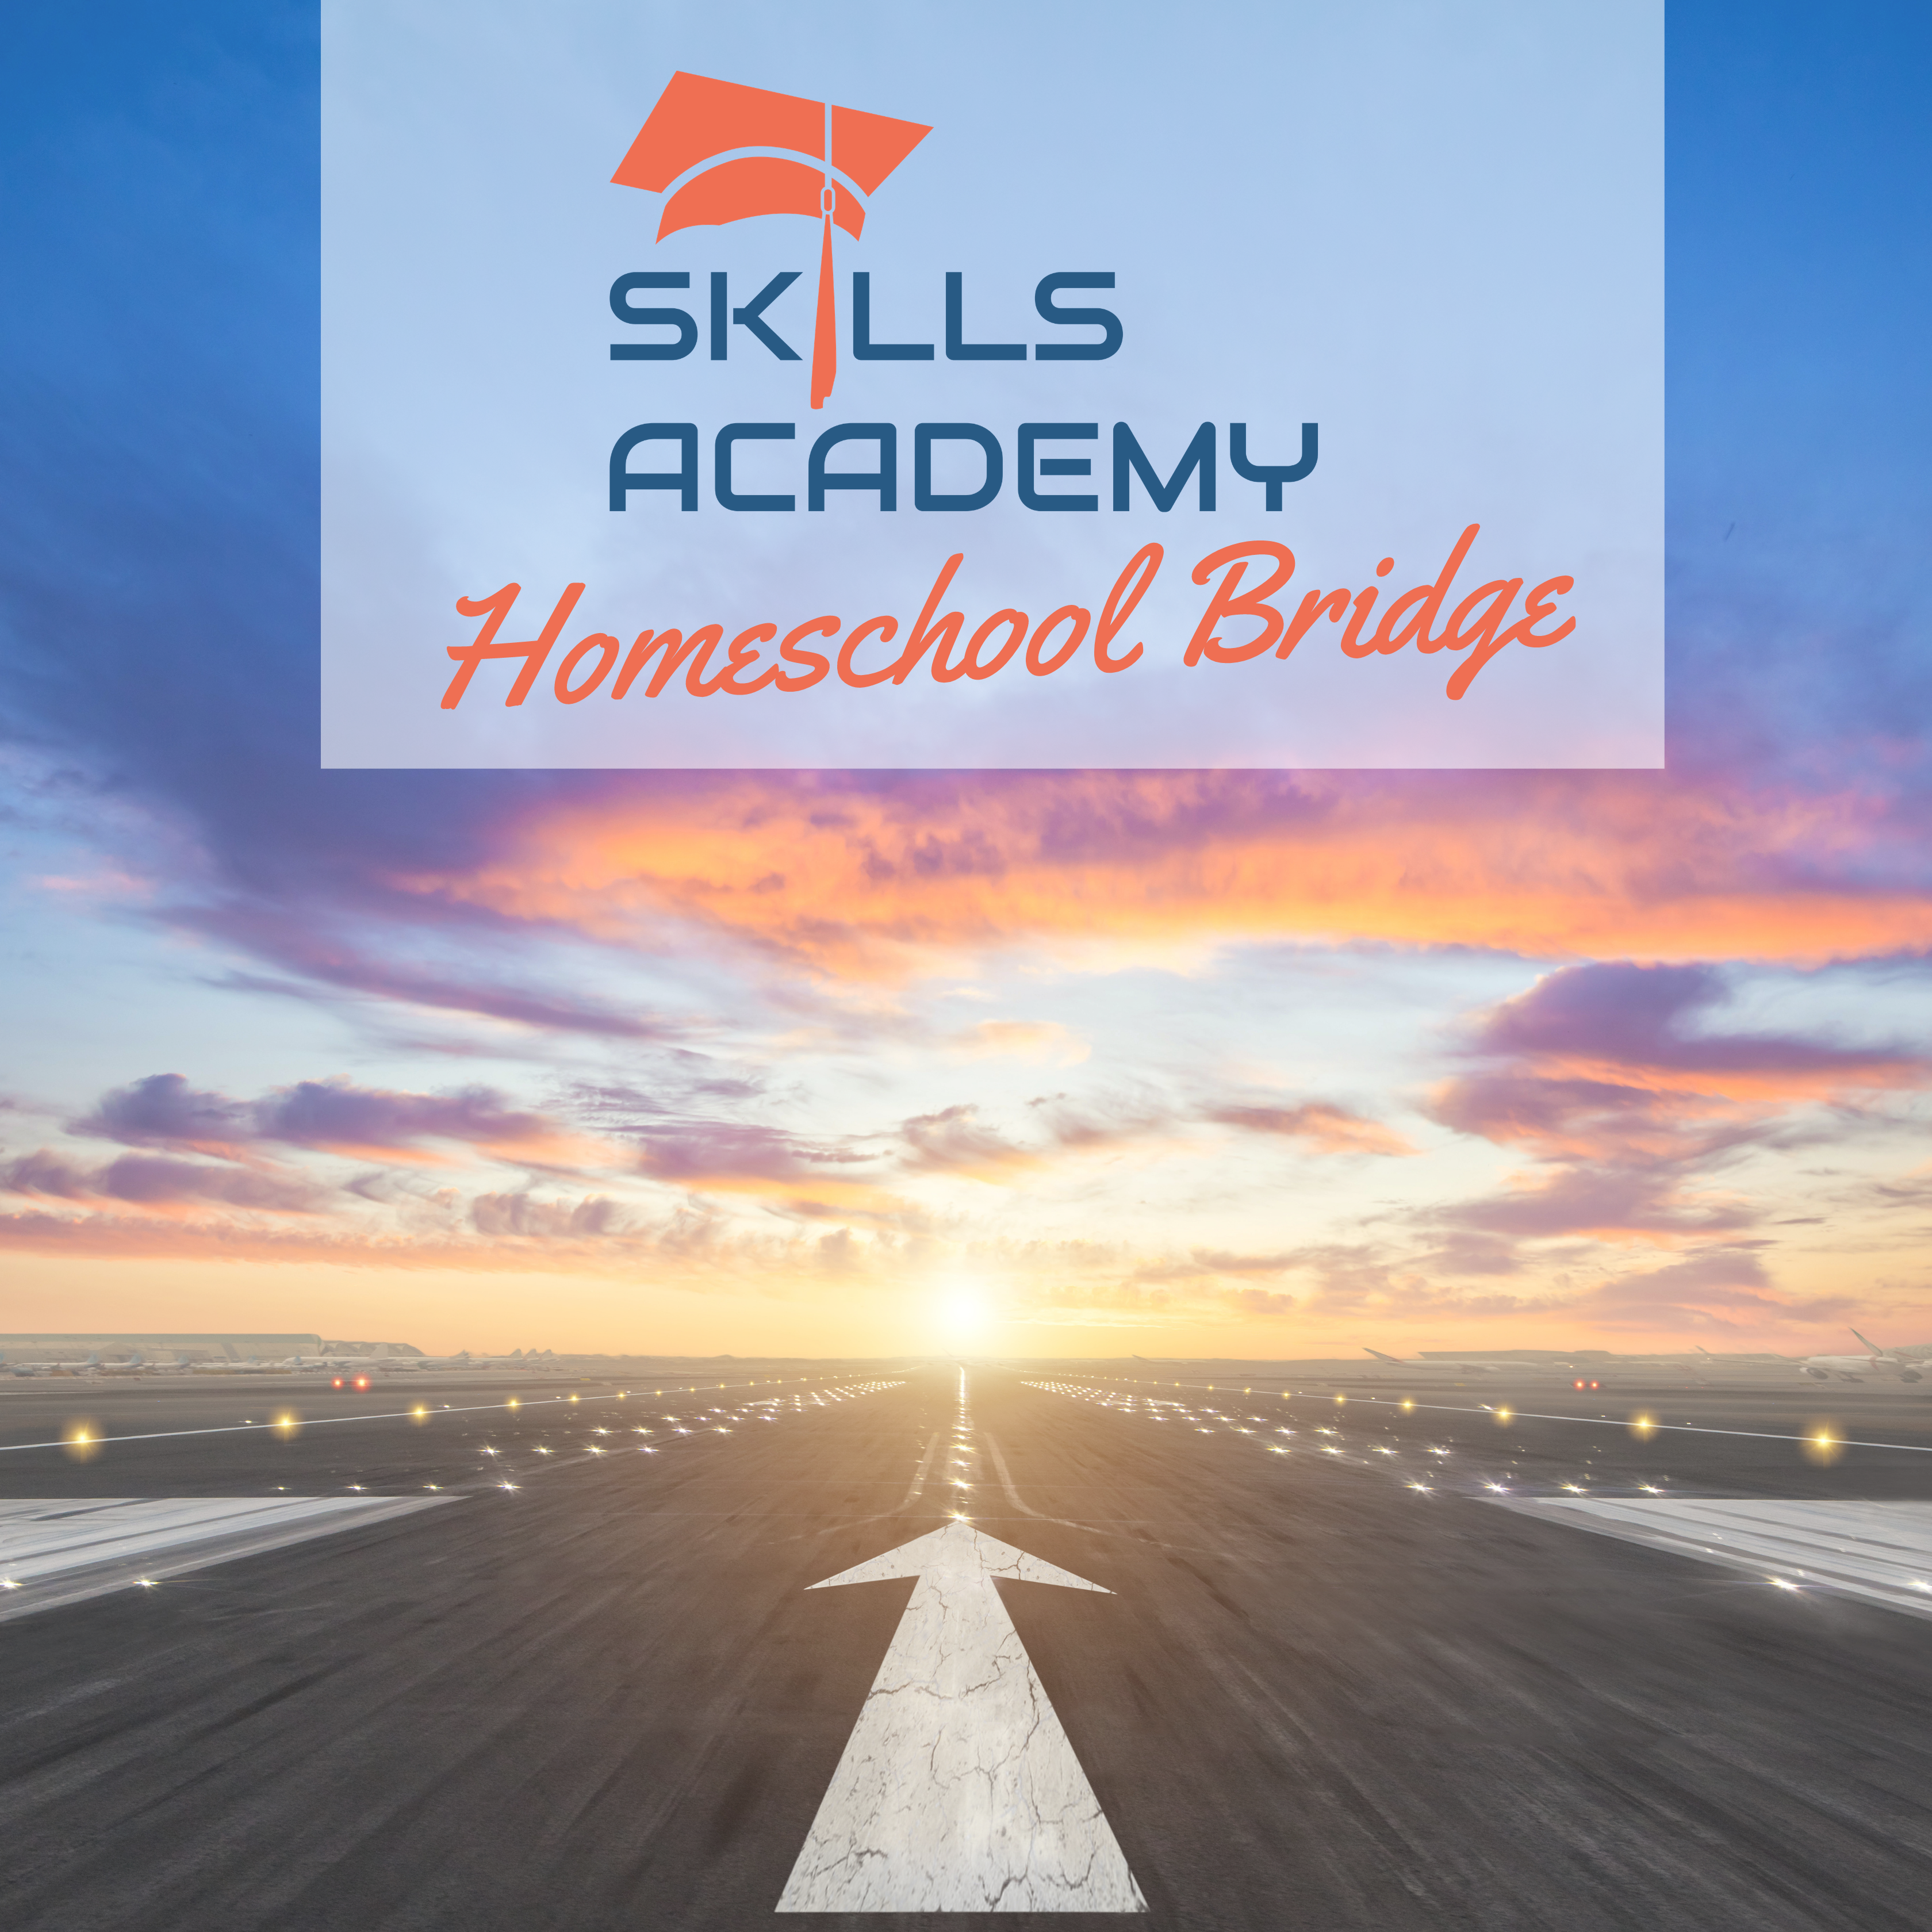 Homeschool Bridge subscription plan